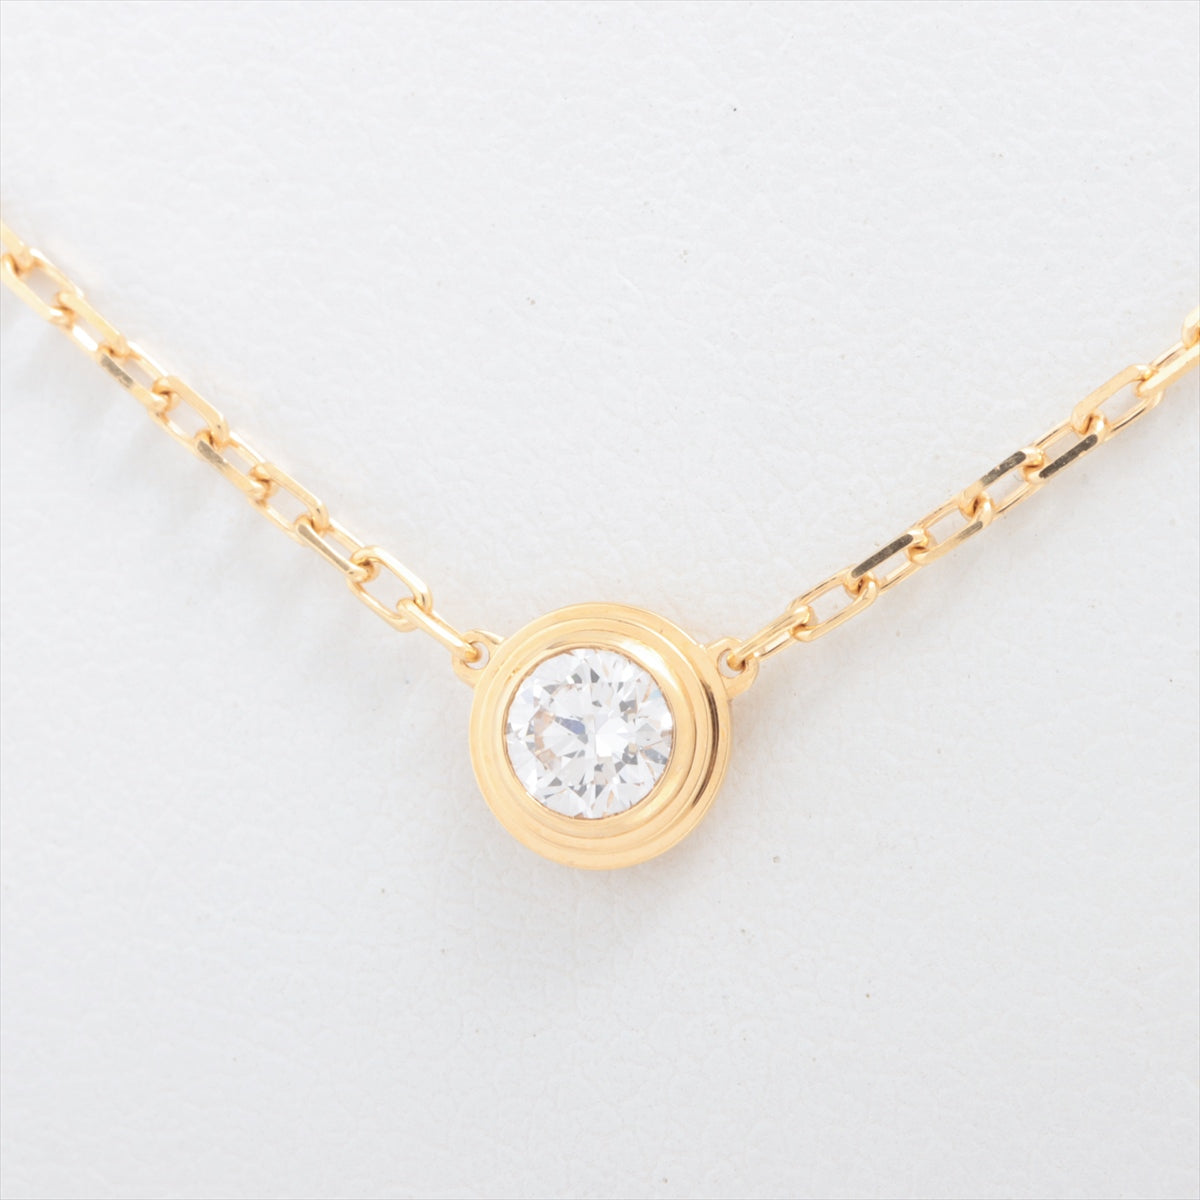 Cartier - Cartier diamant legers necklace on Designer Wardrobe